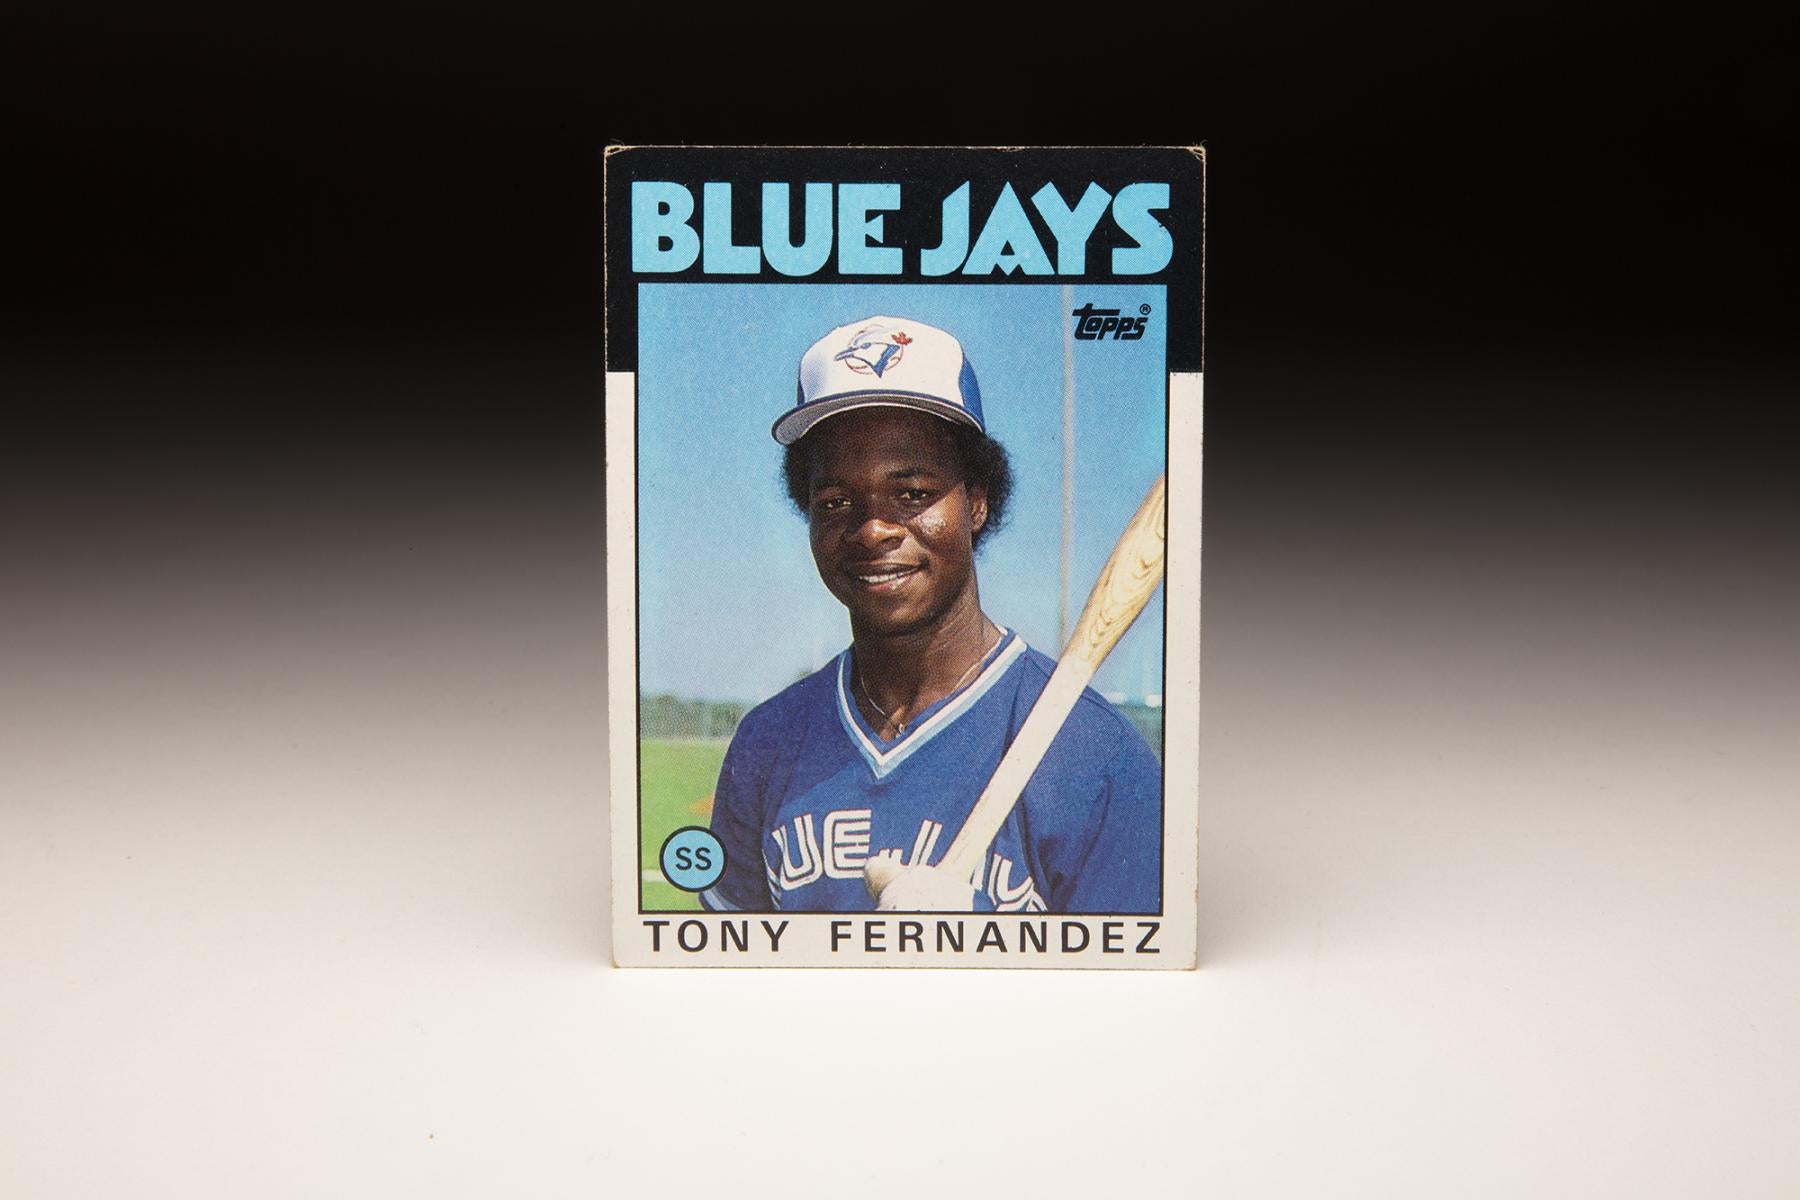 2001 Tony Fernandez Toronto Blue Jays Game Worn Jersey